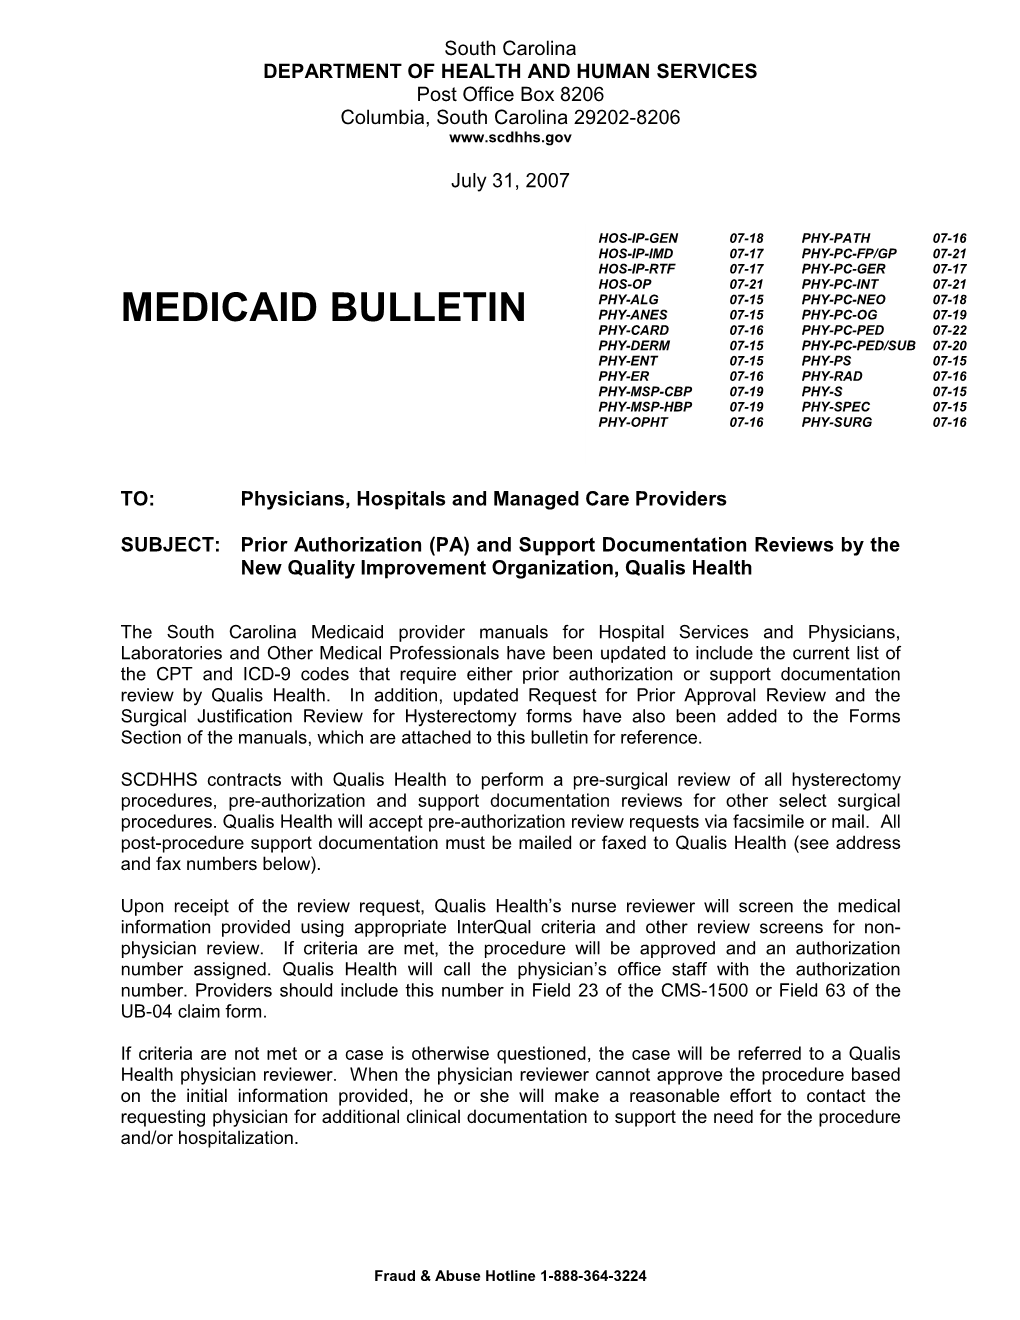 Medicaid Bulletin